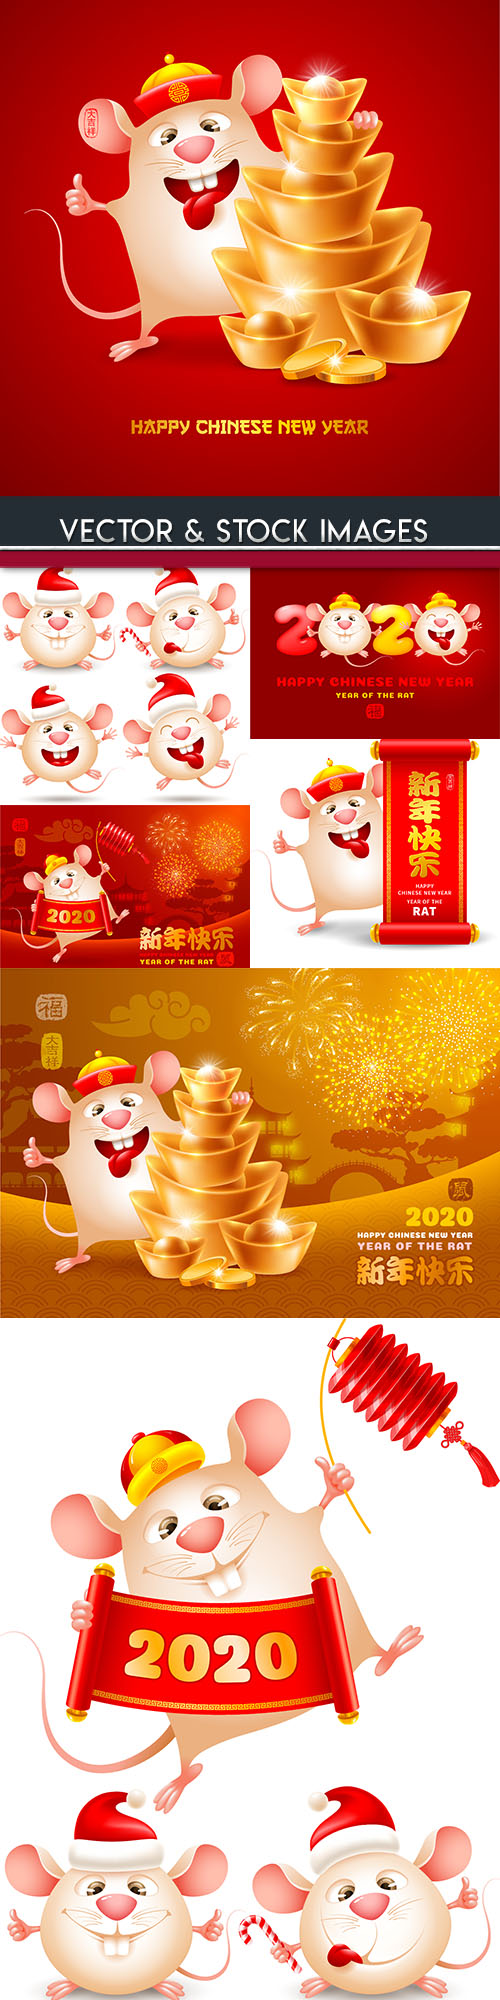 Rat cartoon symbol of New Year 2020 illustration 6